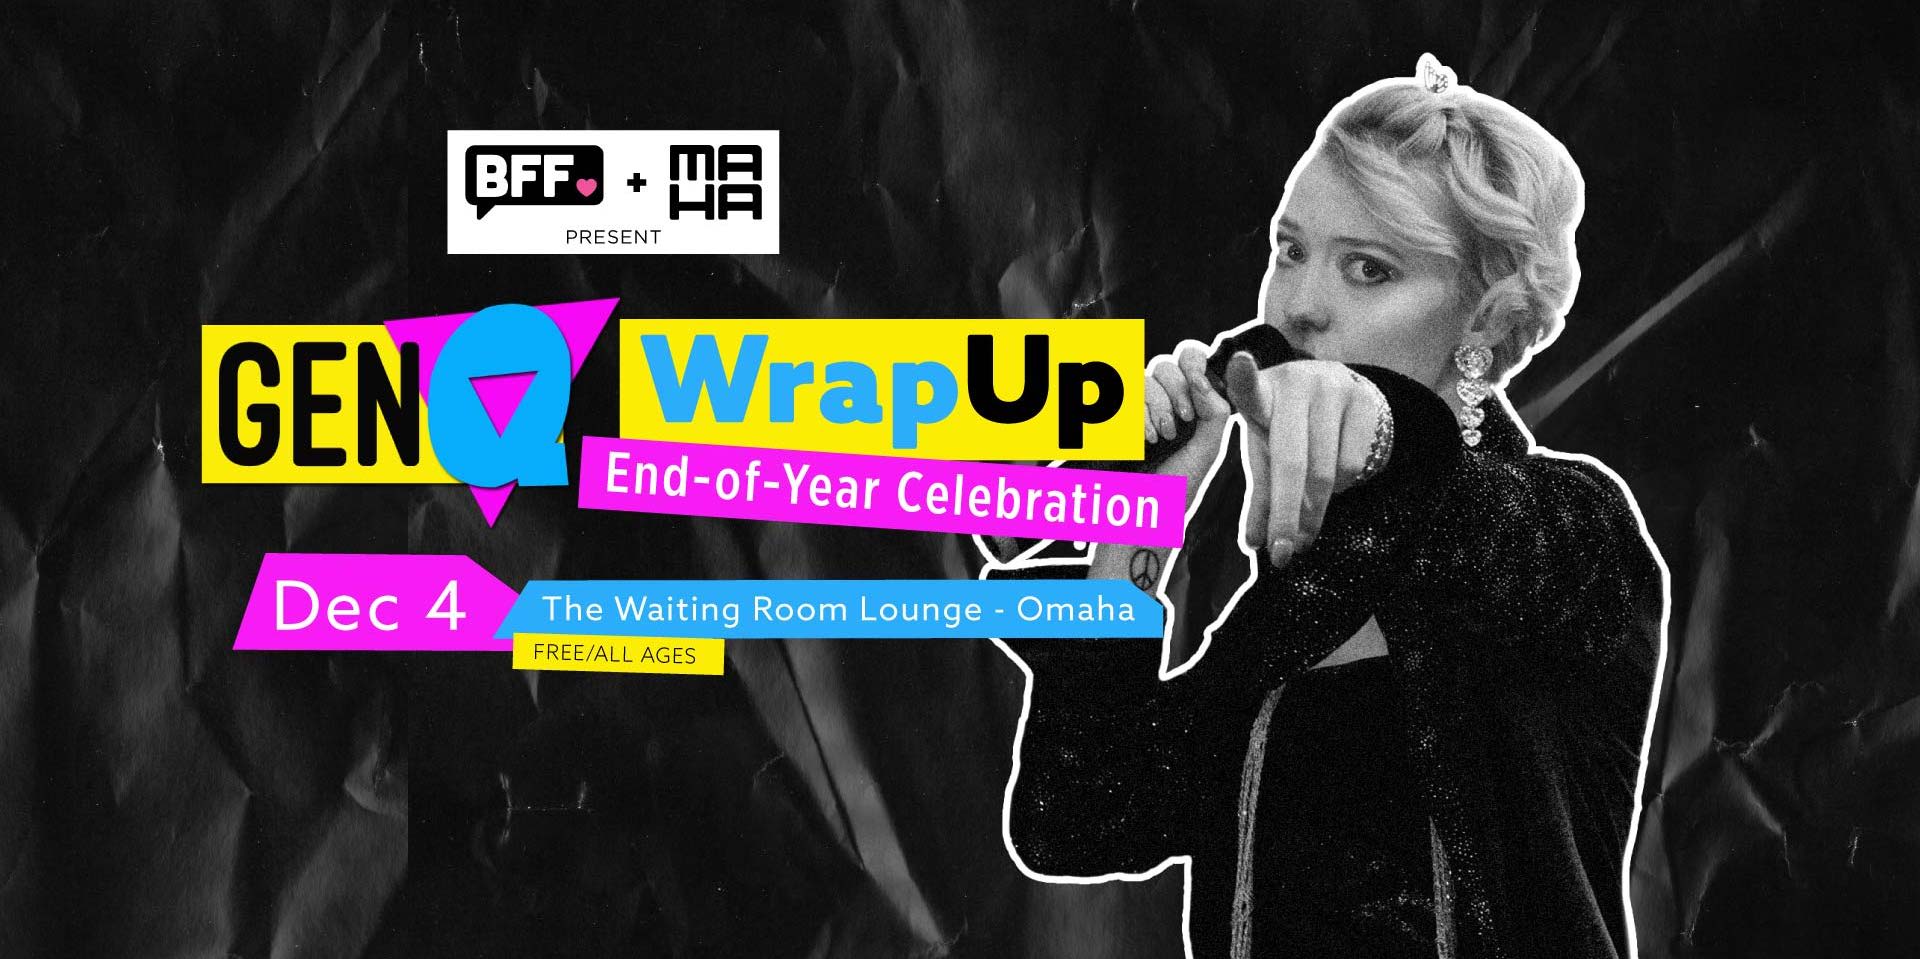 BFF + MAHA presents: GEN Q WRAP UP! promotional image